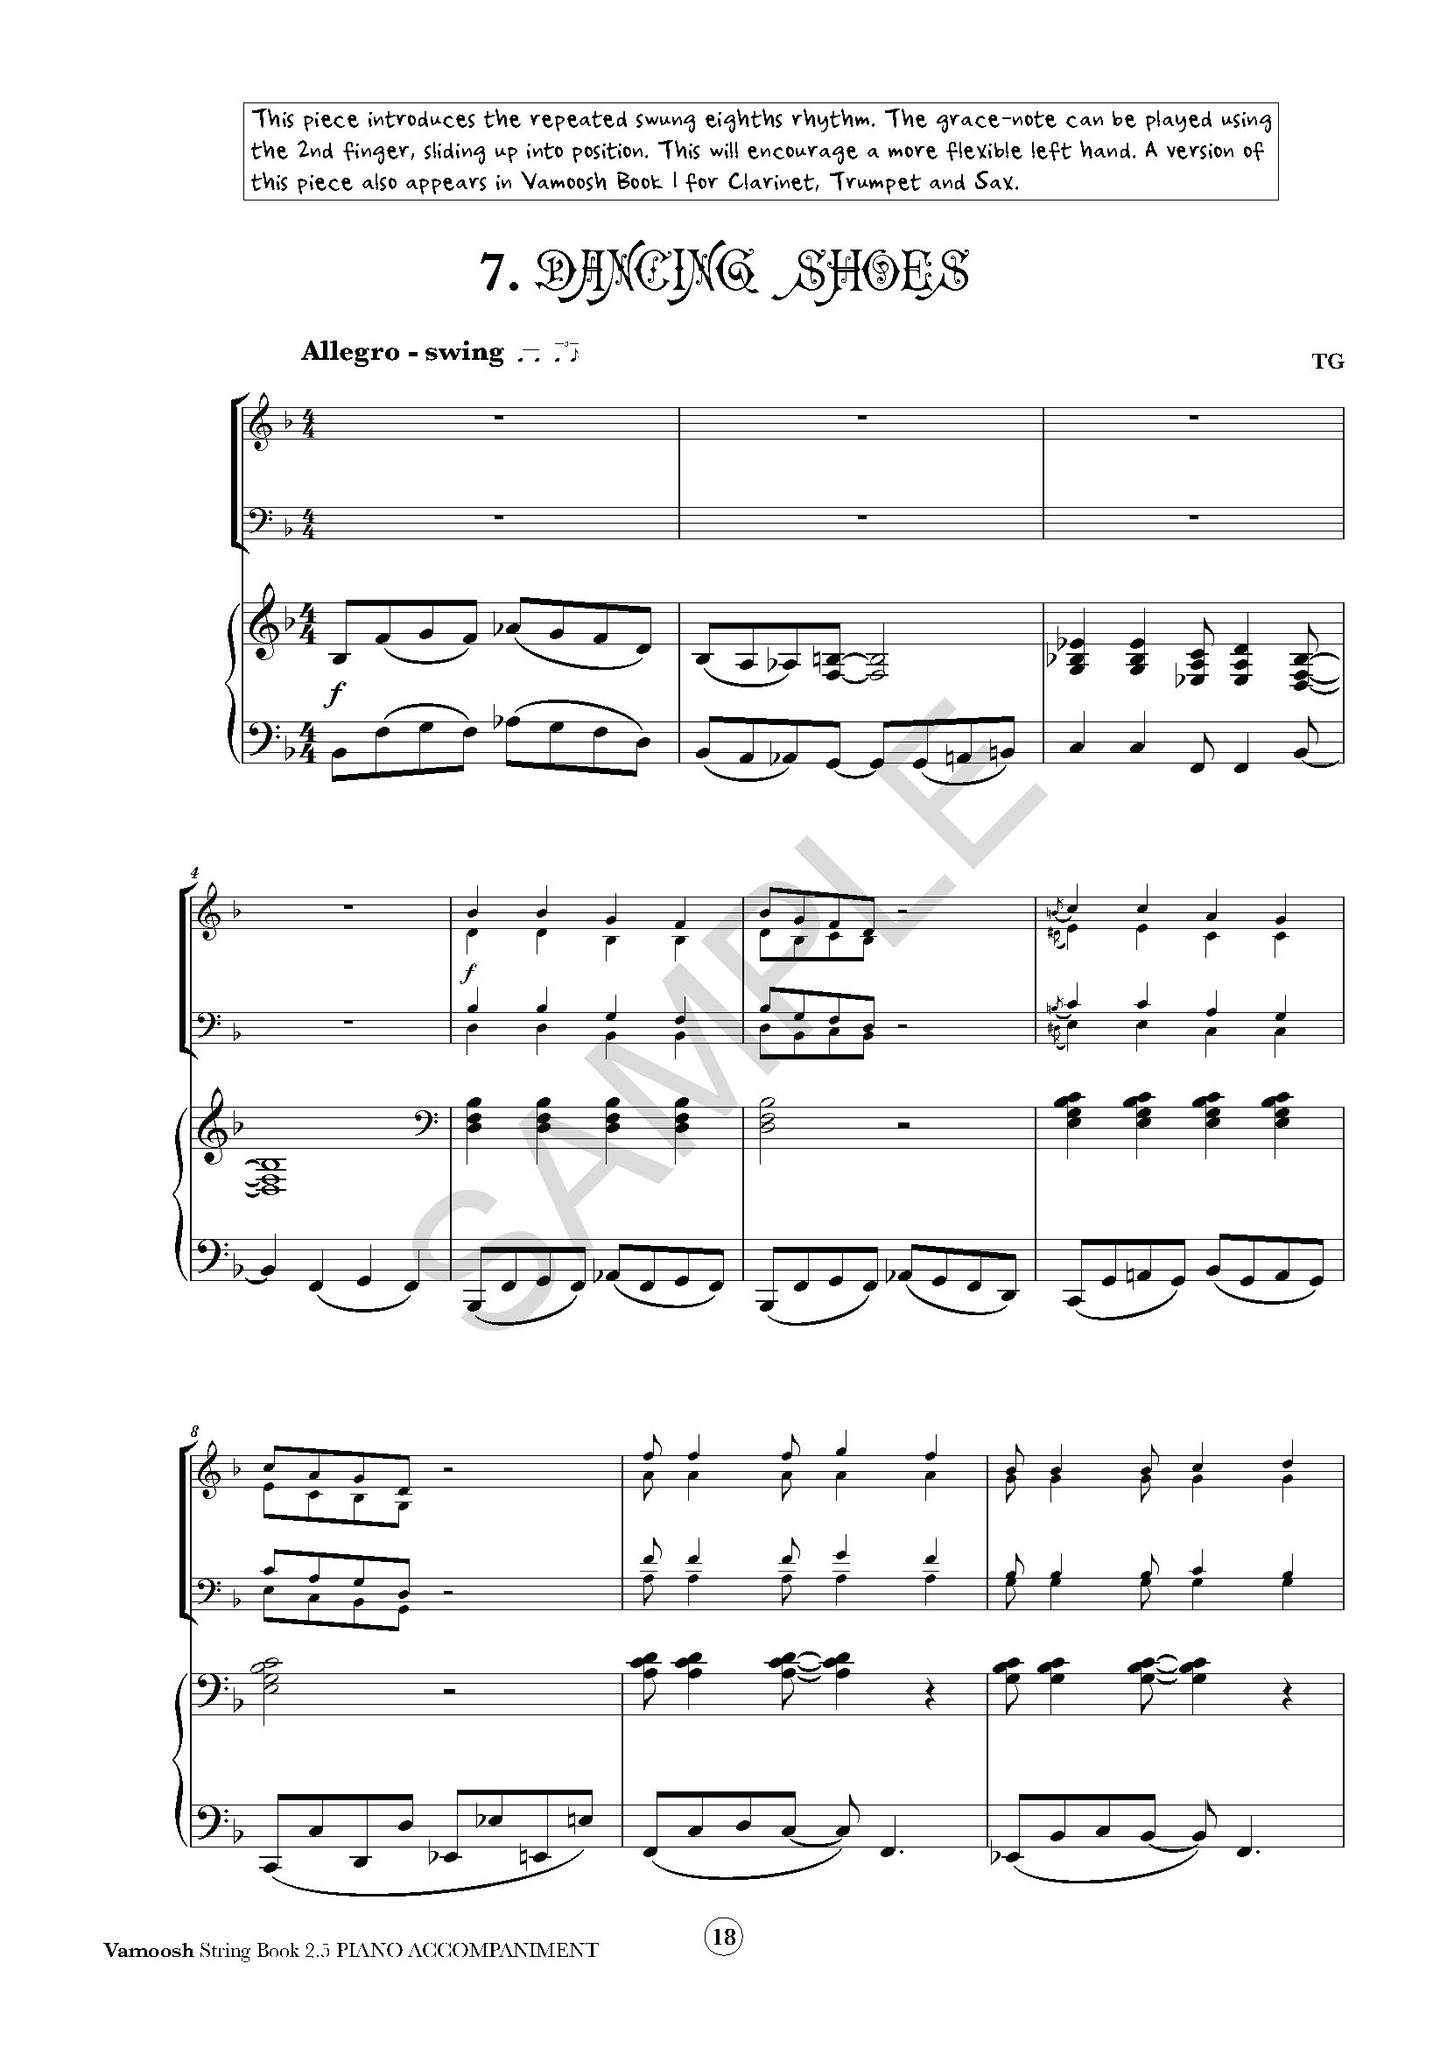 Vamoosh String Book 2.5 Piano Accompaniments